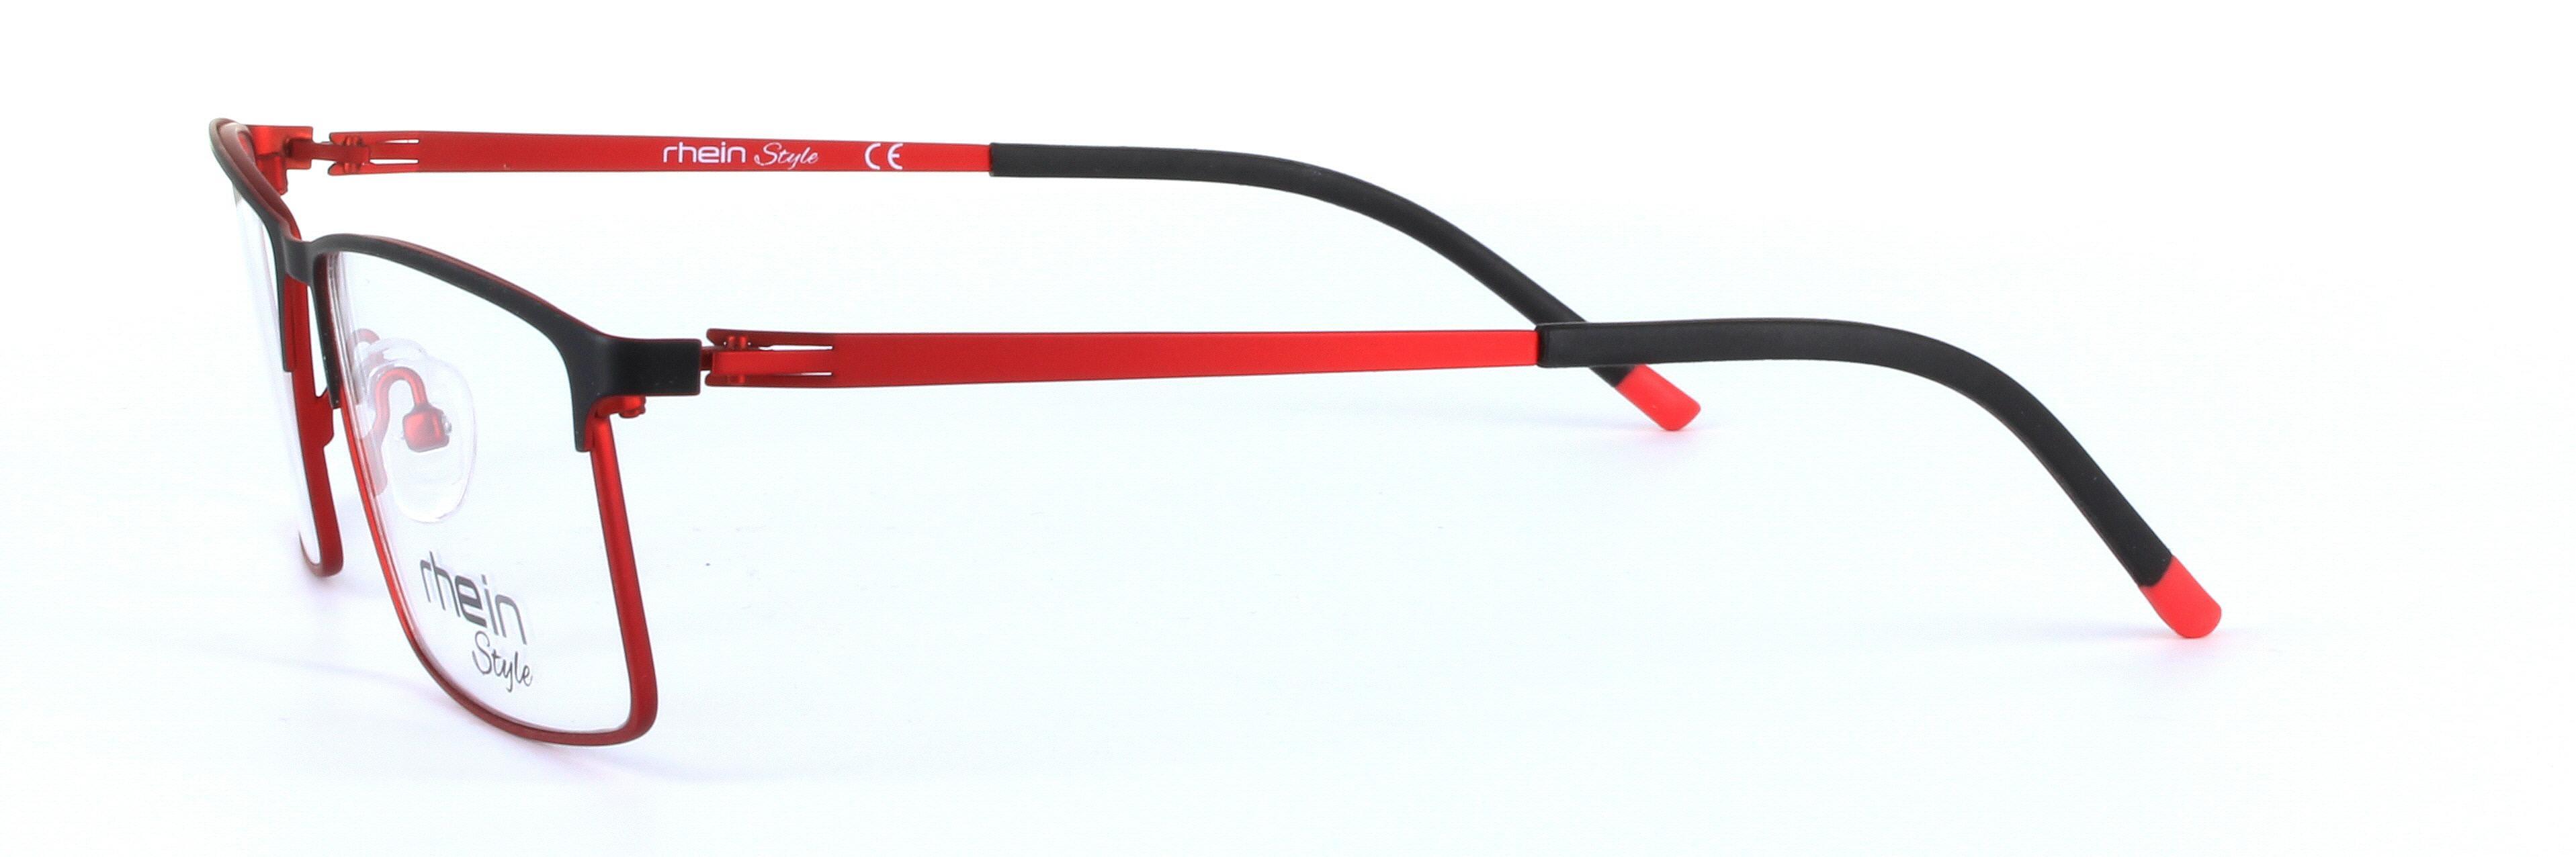 Mitchell Black Full Rim Rectangular Metal Glasses - Image View 2